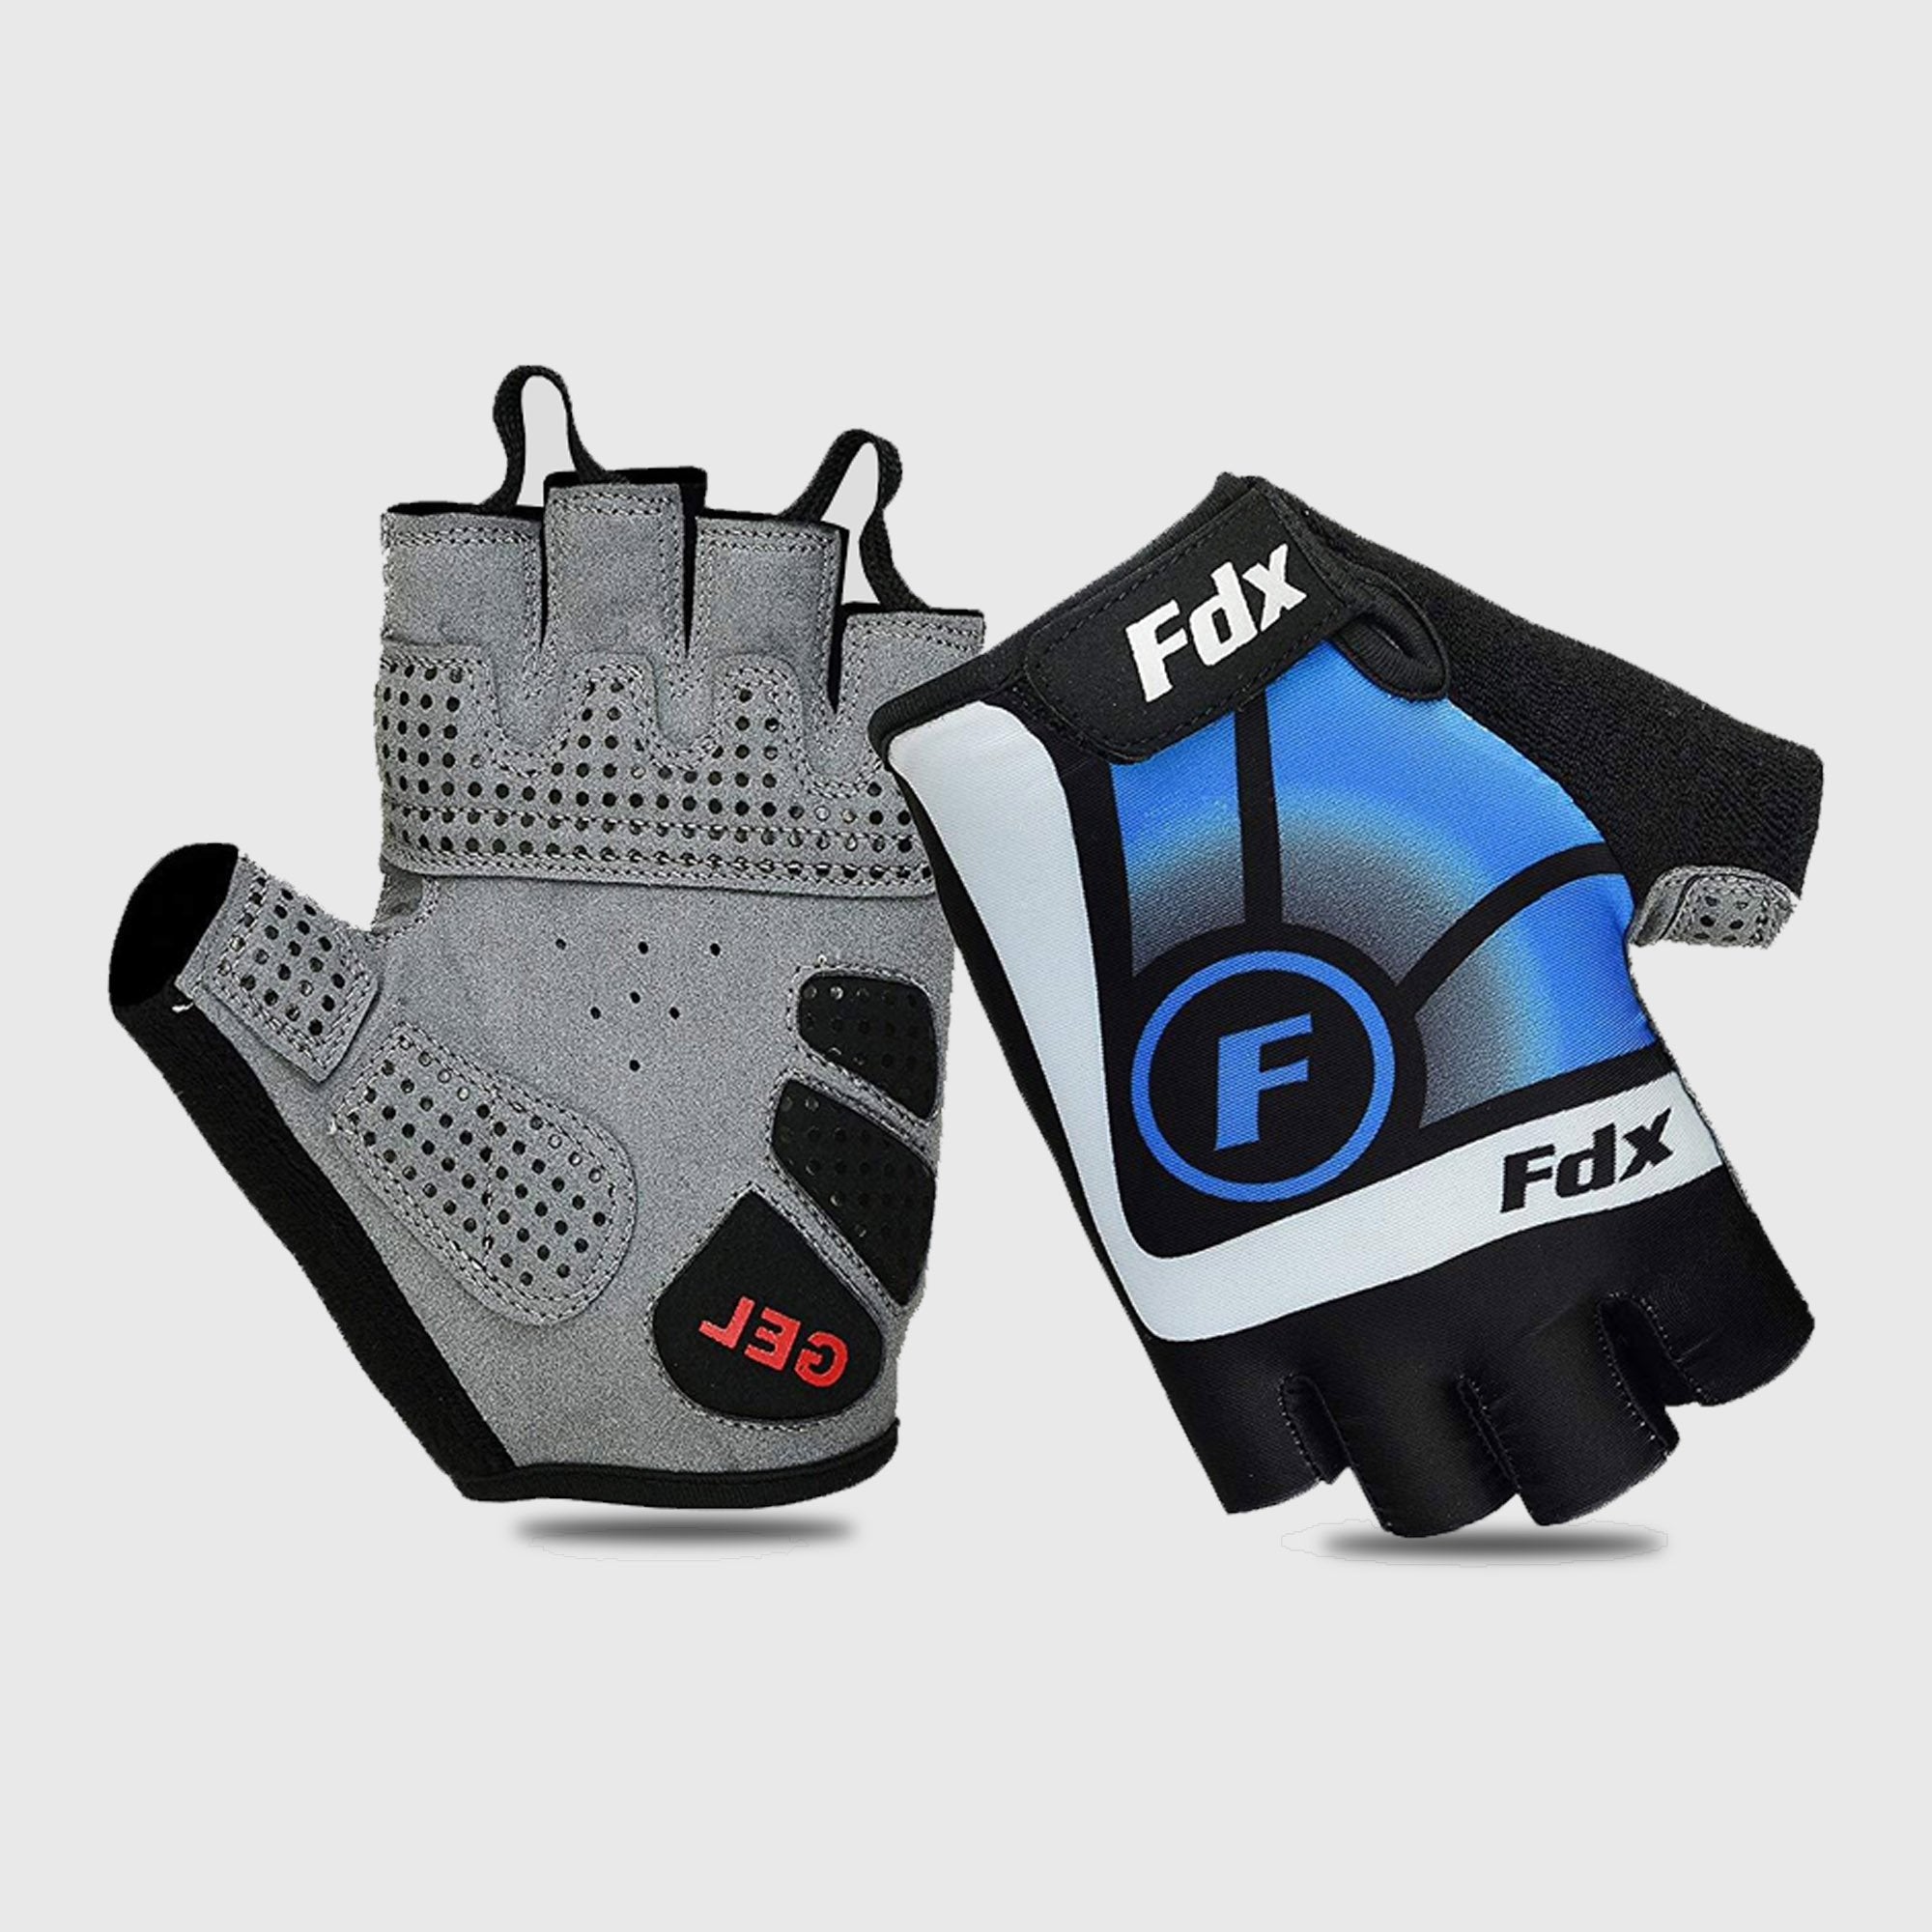 Fdx Signature Blue Gel Padded Short Finger Summer Cycling Gloves